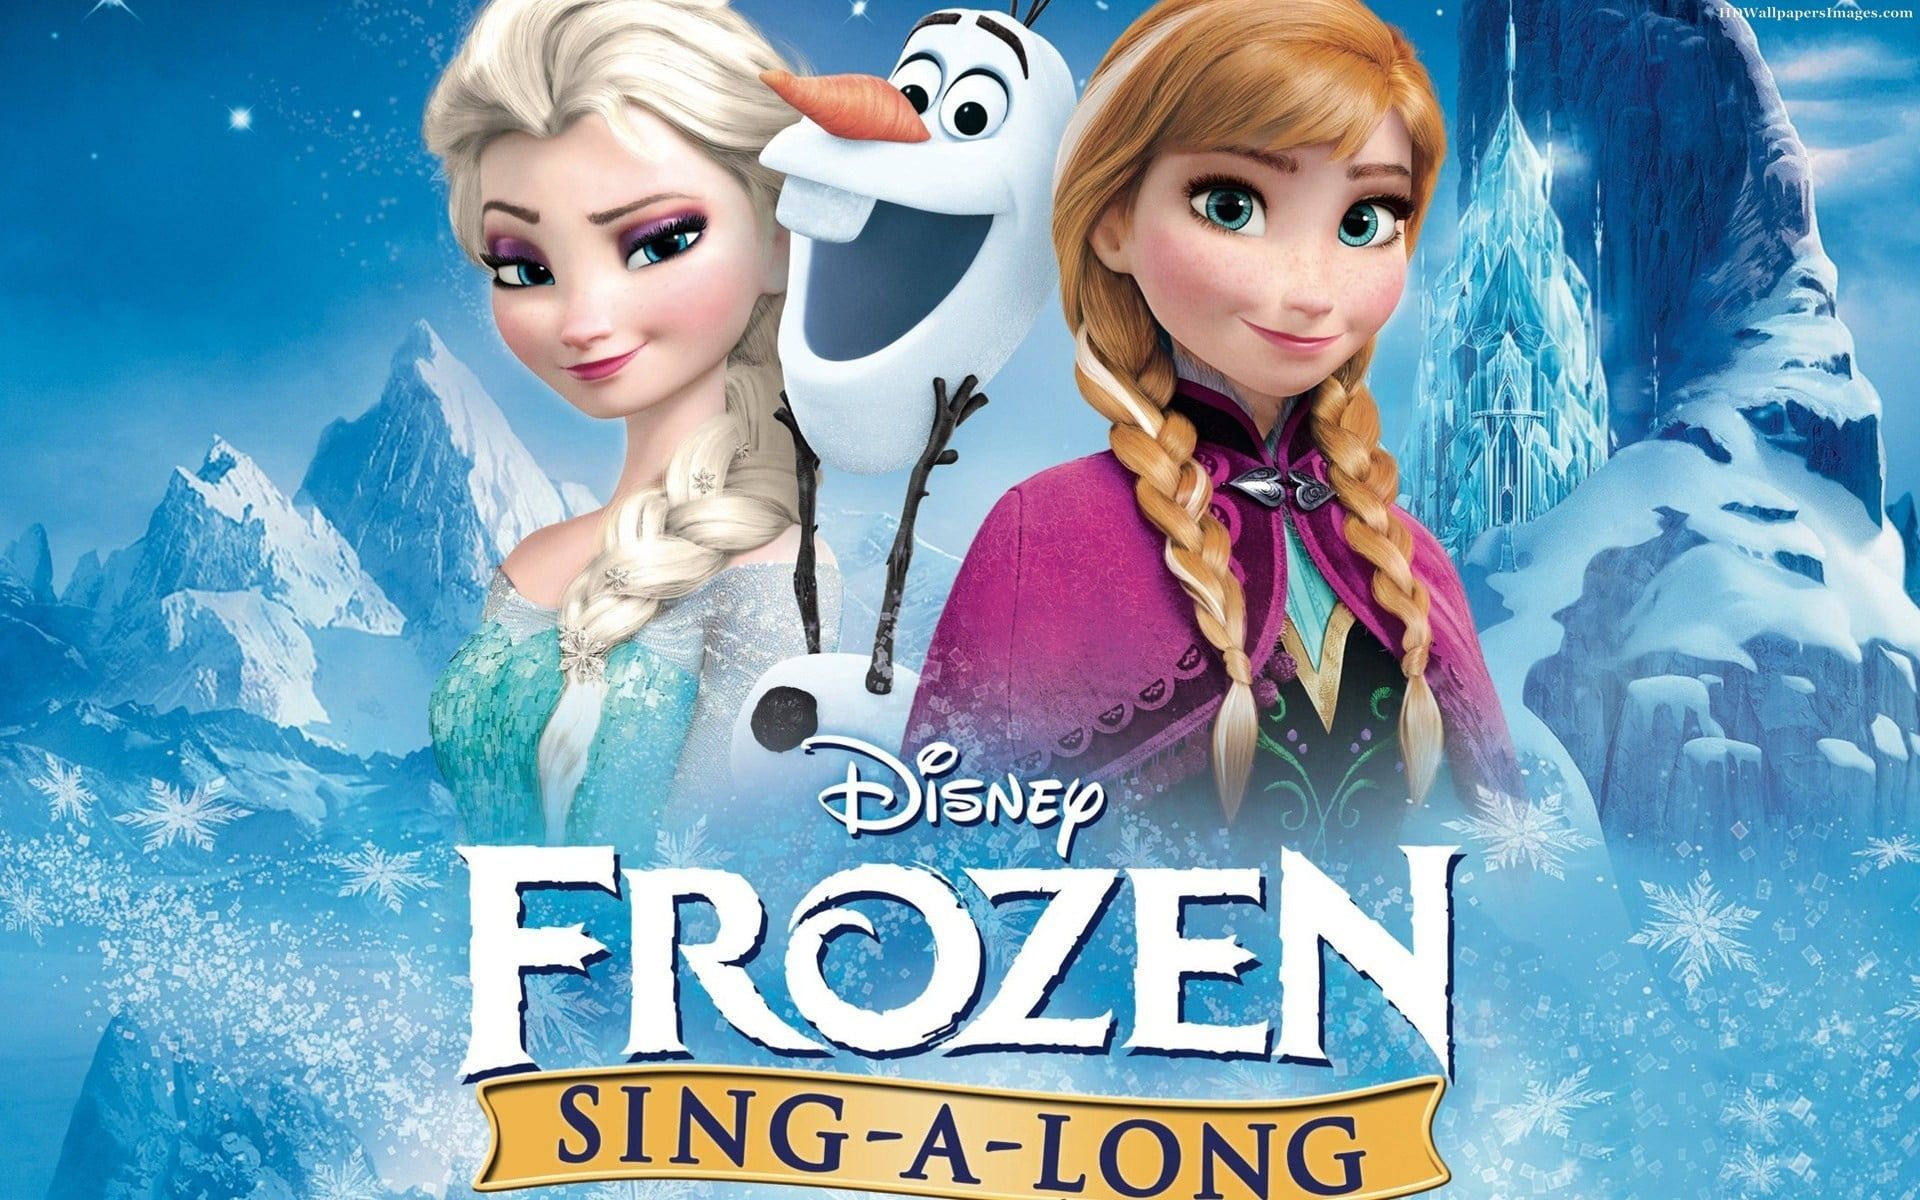 Disney Frozen Elsa and Anna wallpaper, Frozen (movie), Olaf